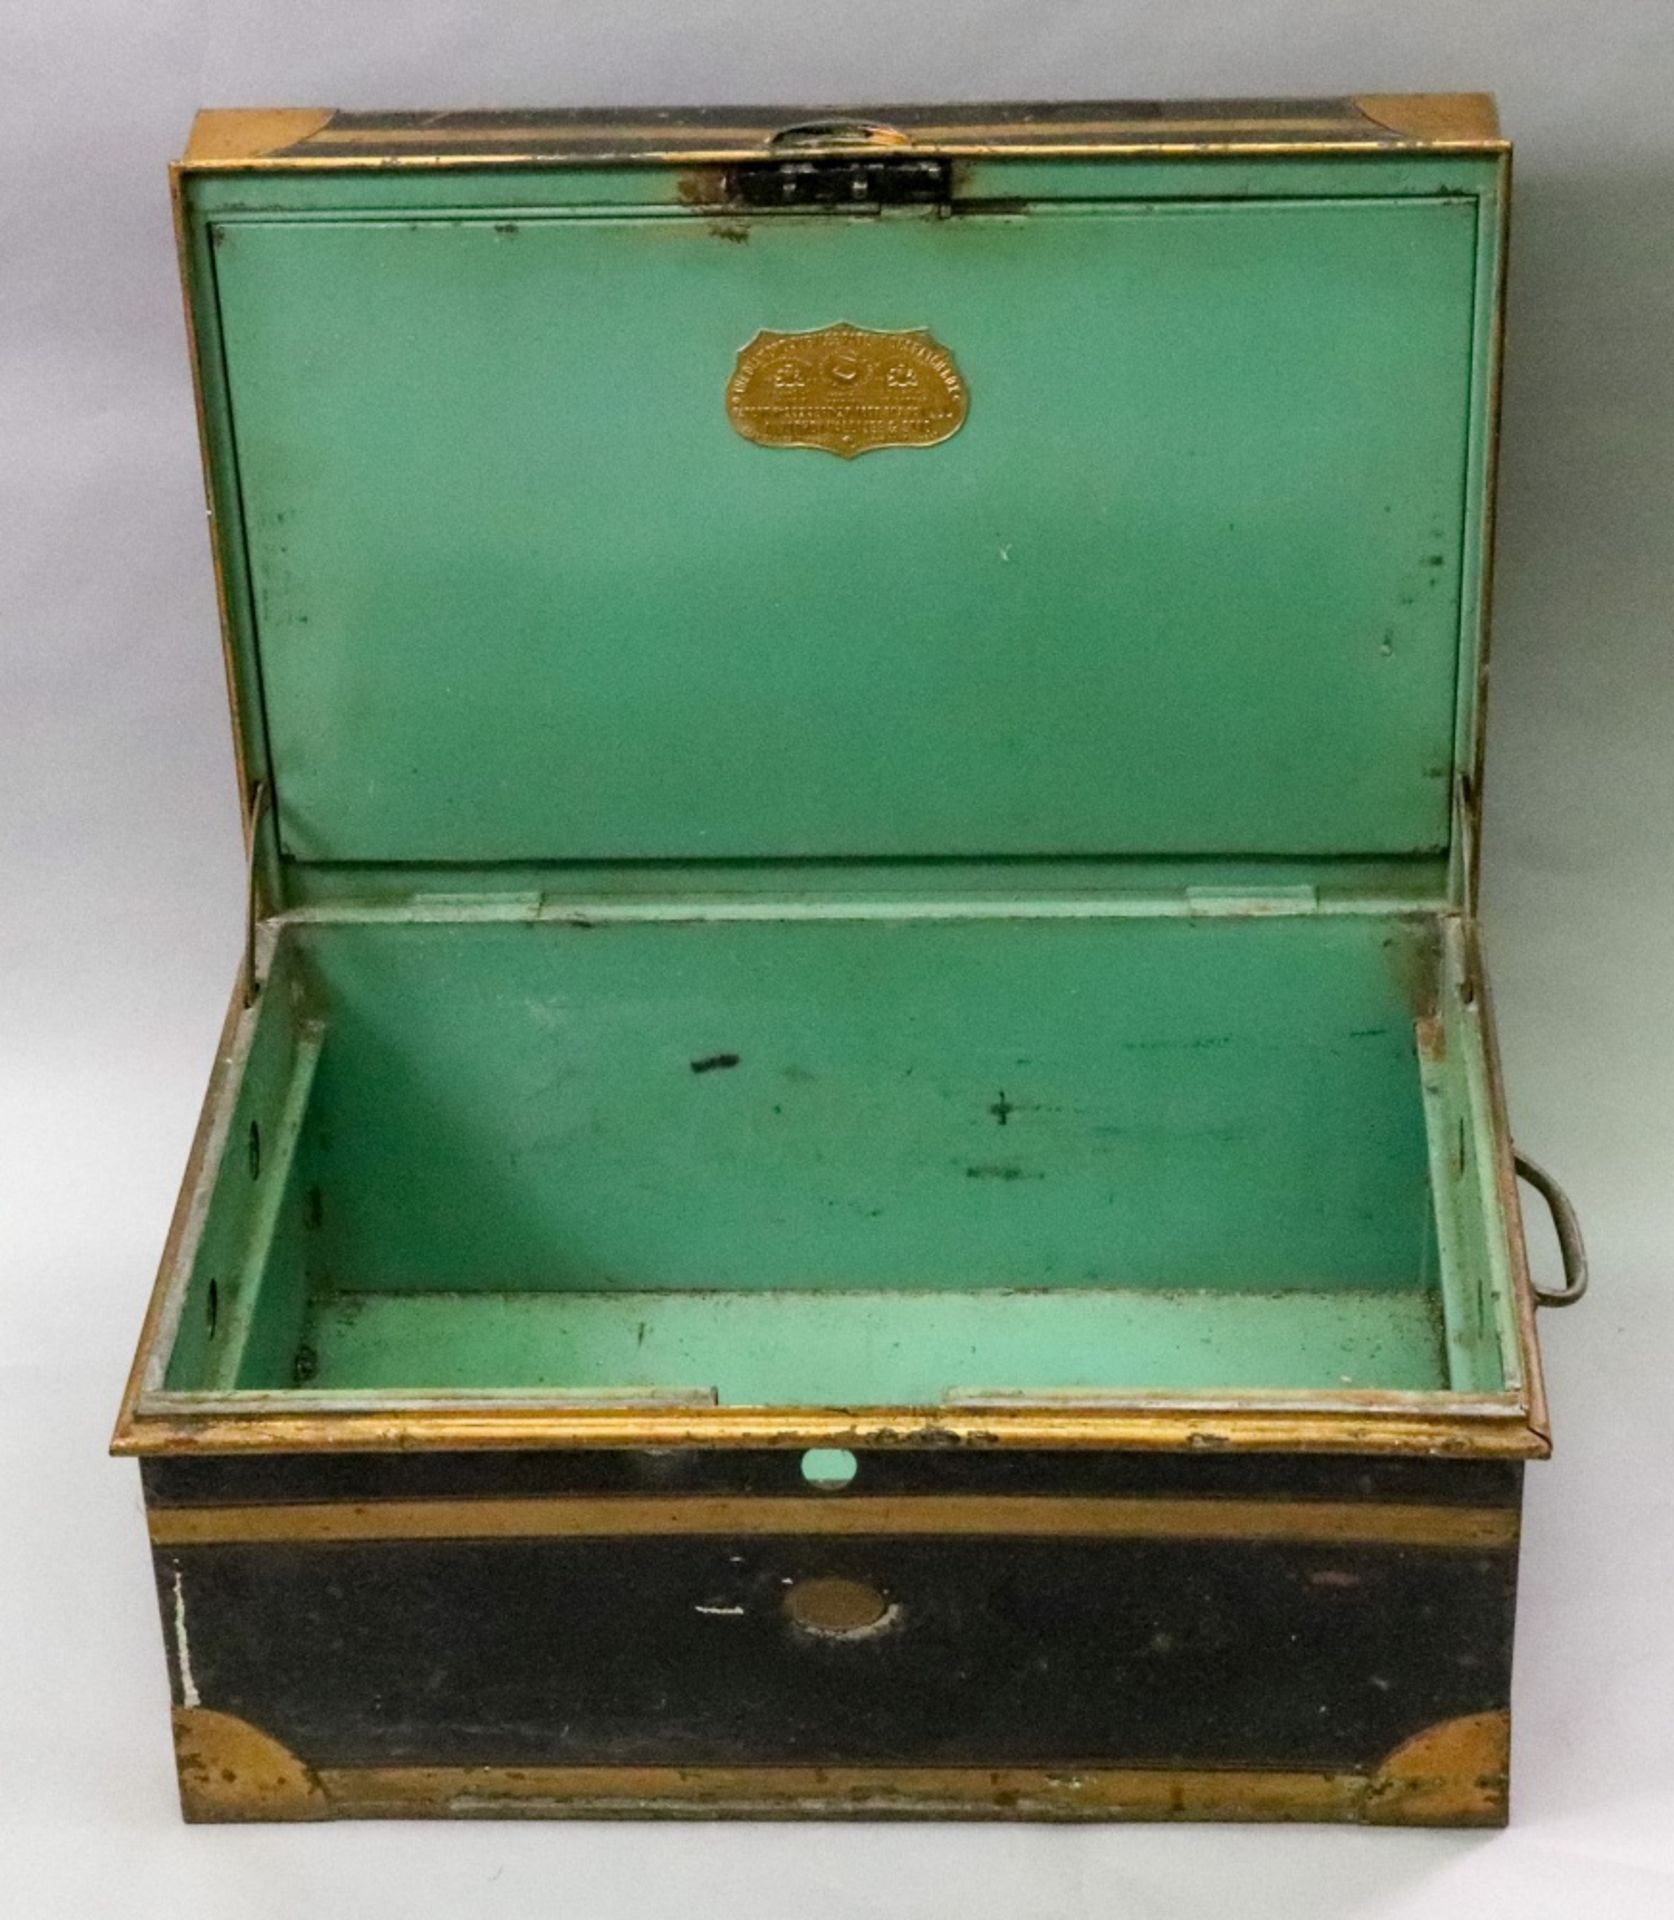 The Diamond Jubilee Patent Despatch Box, Alliboy Vallijee & Sons, Mooltan, India, - Image 3 of 3